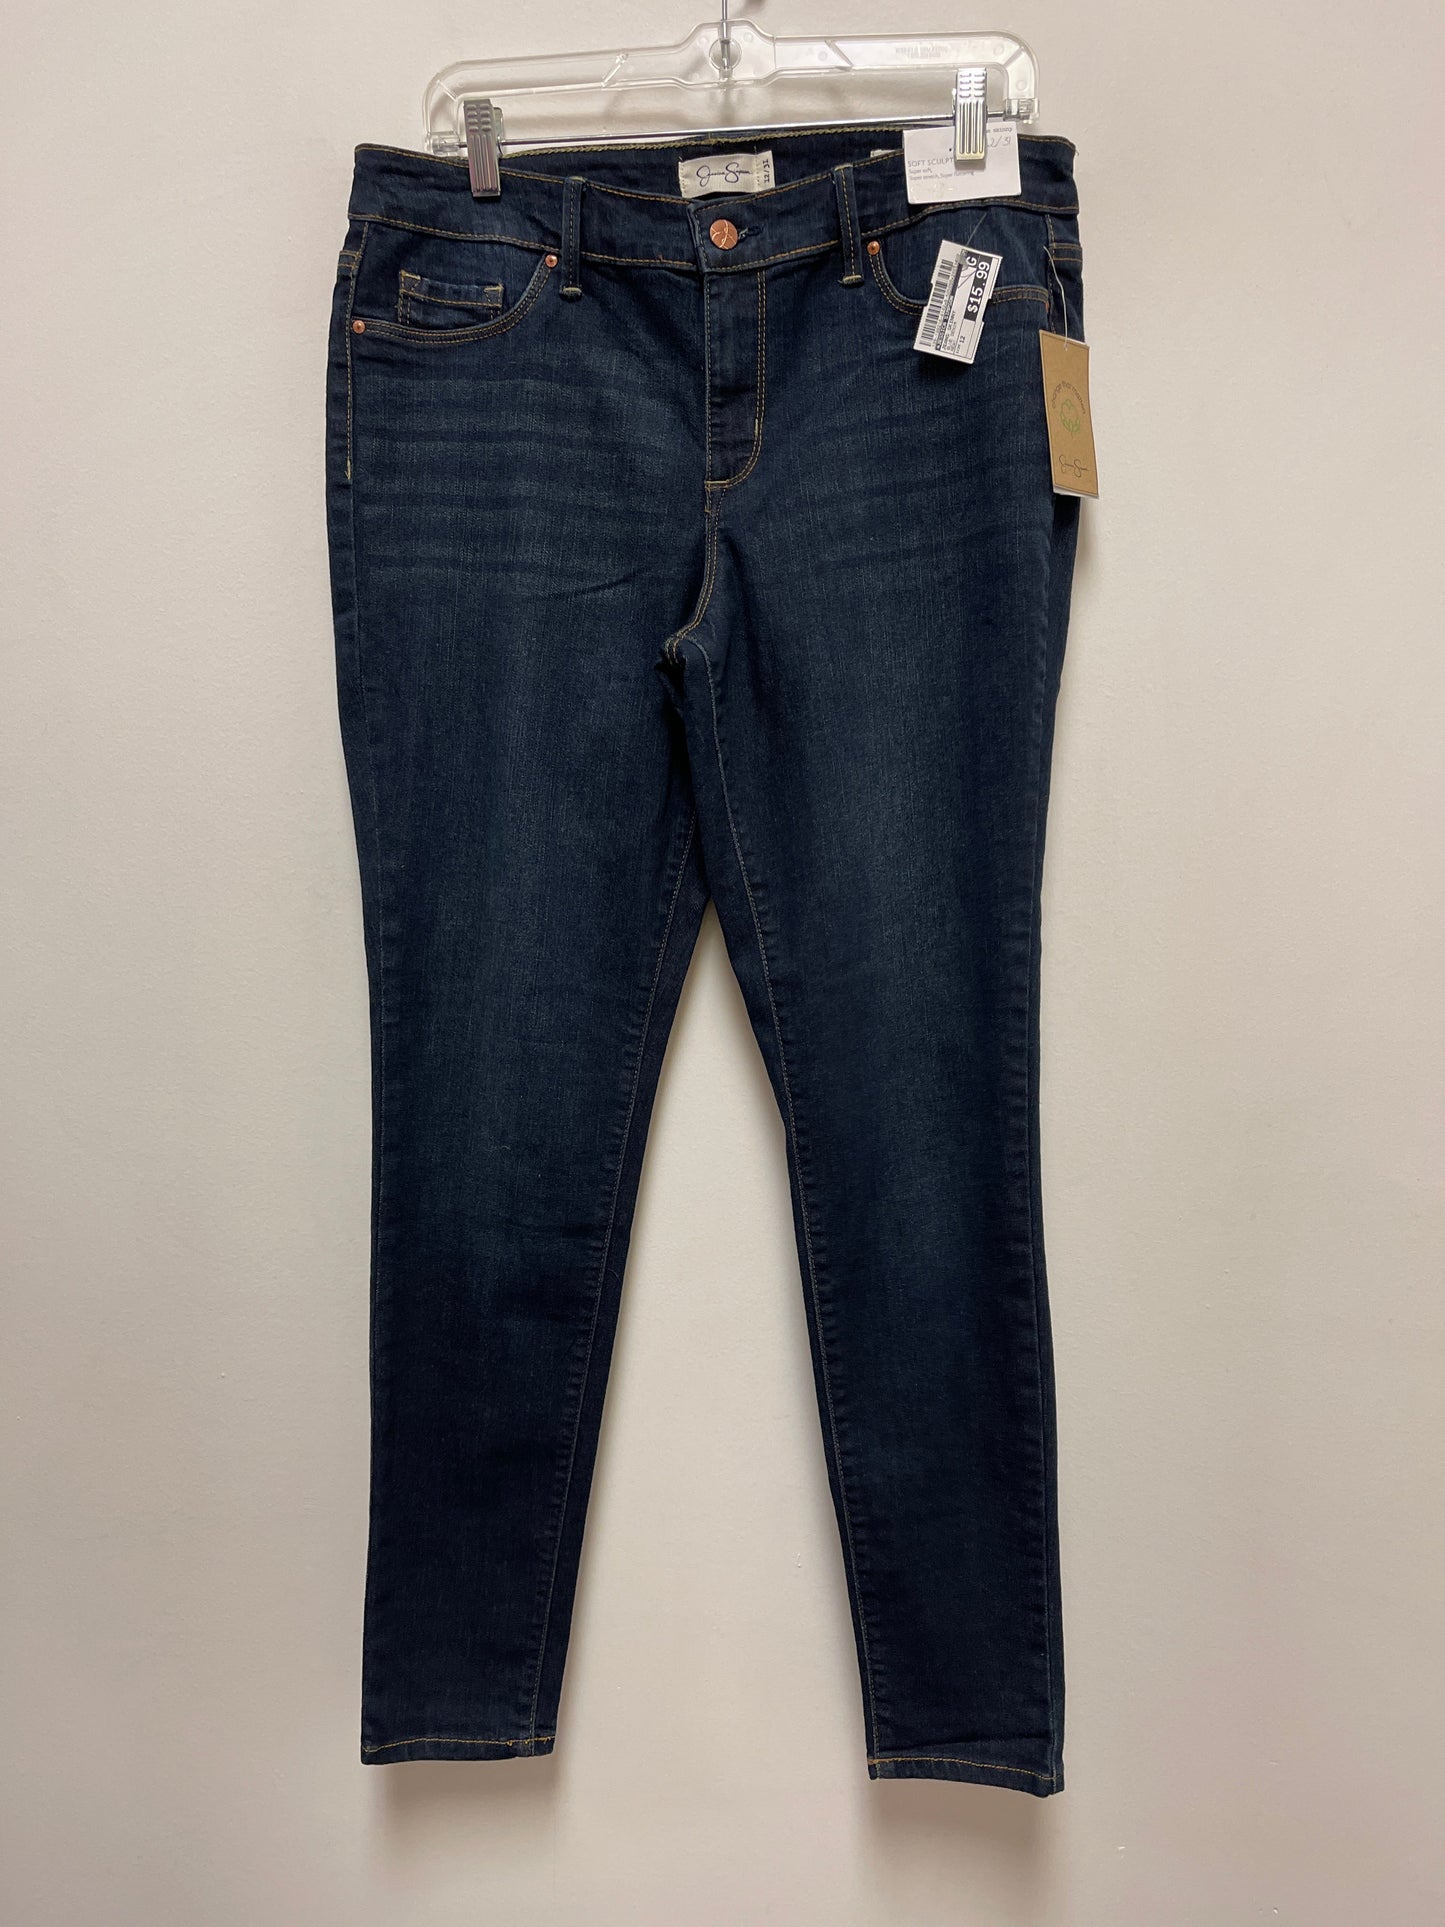 Blue Denim Jeans Skinny Jessica Simpson, Size 12